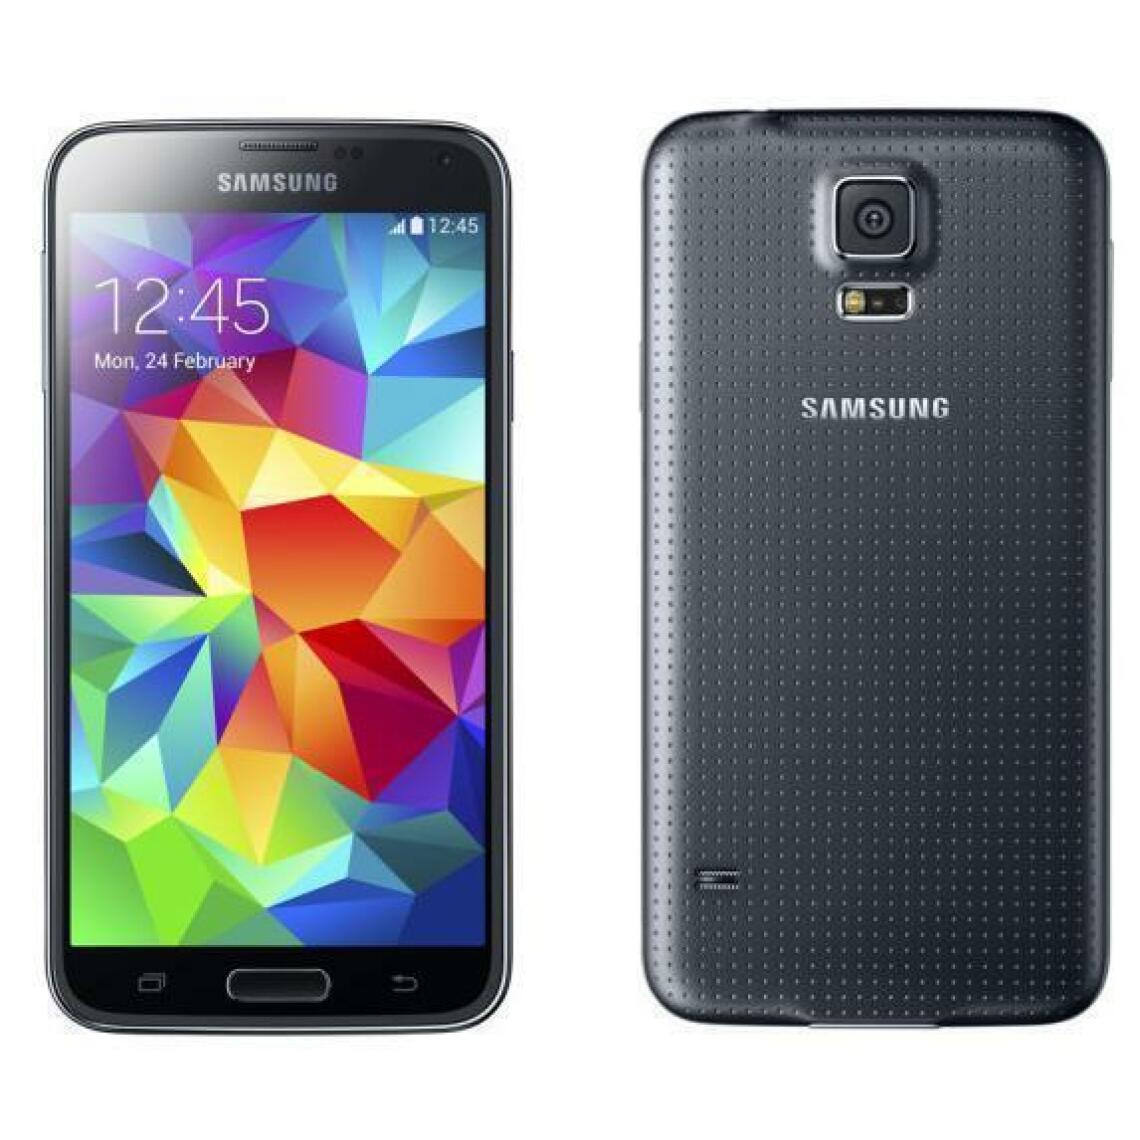 Samsung - Galaxy S5 Noir 16 Go - Smartphone Android